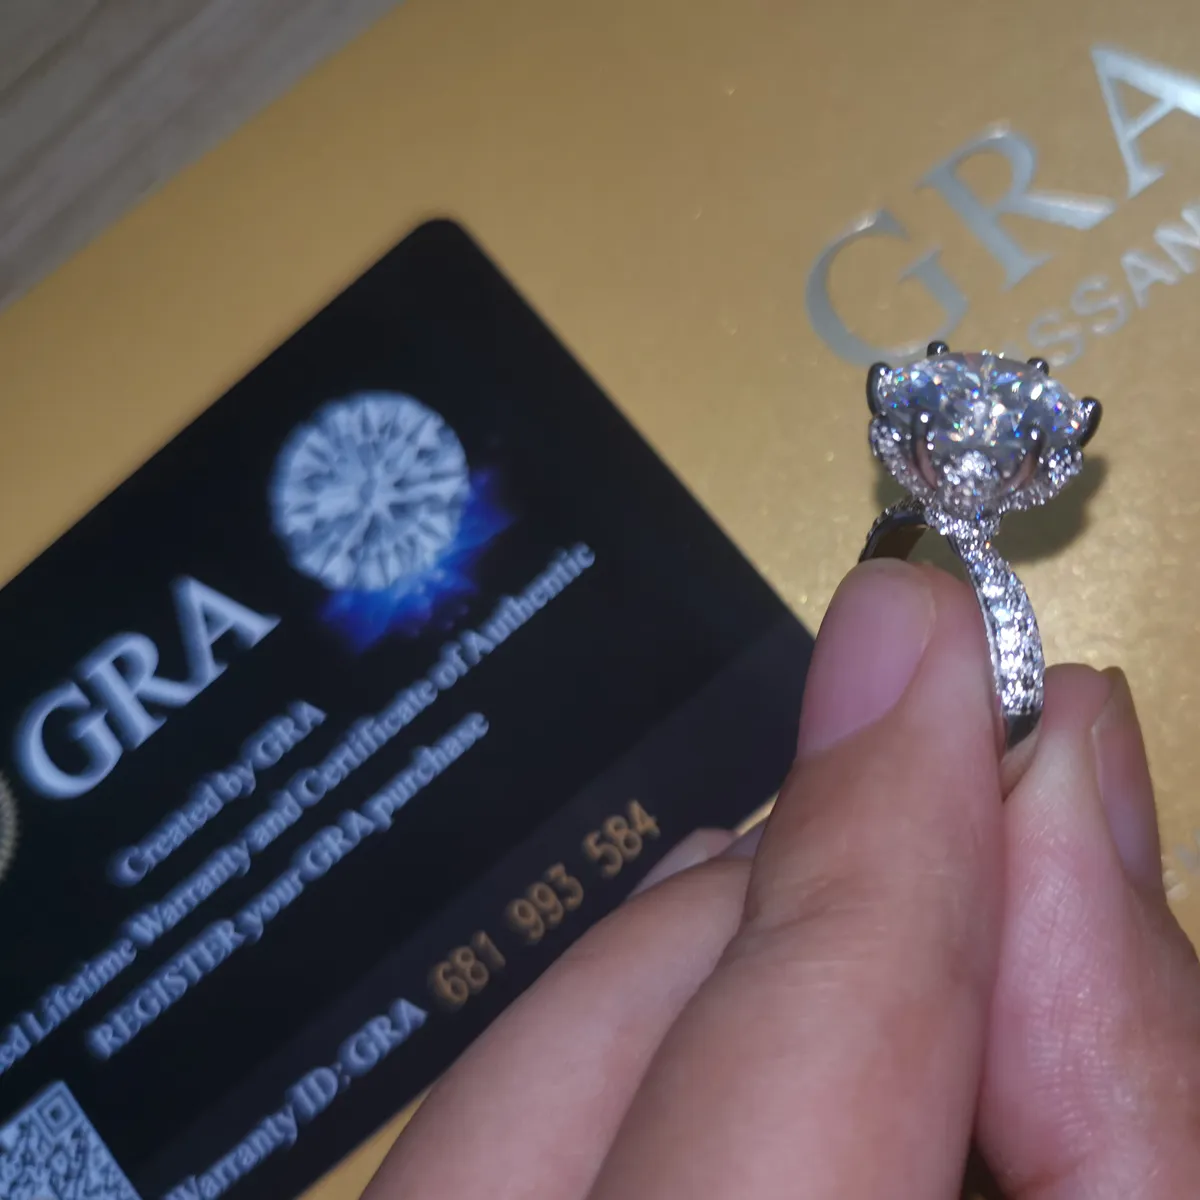 VVS Diamond versus VS Diamond: What's the Difference in Diamond Clarity?